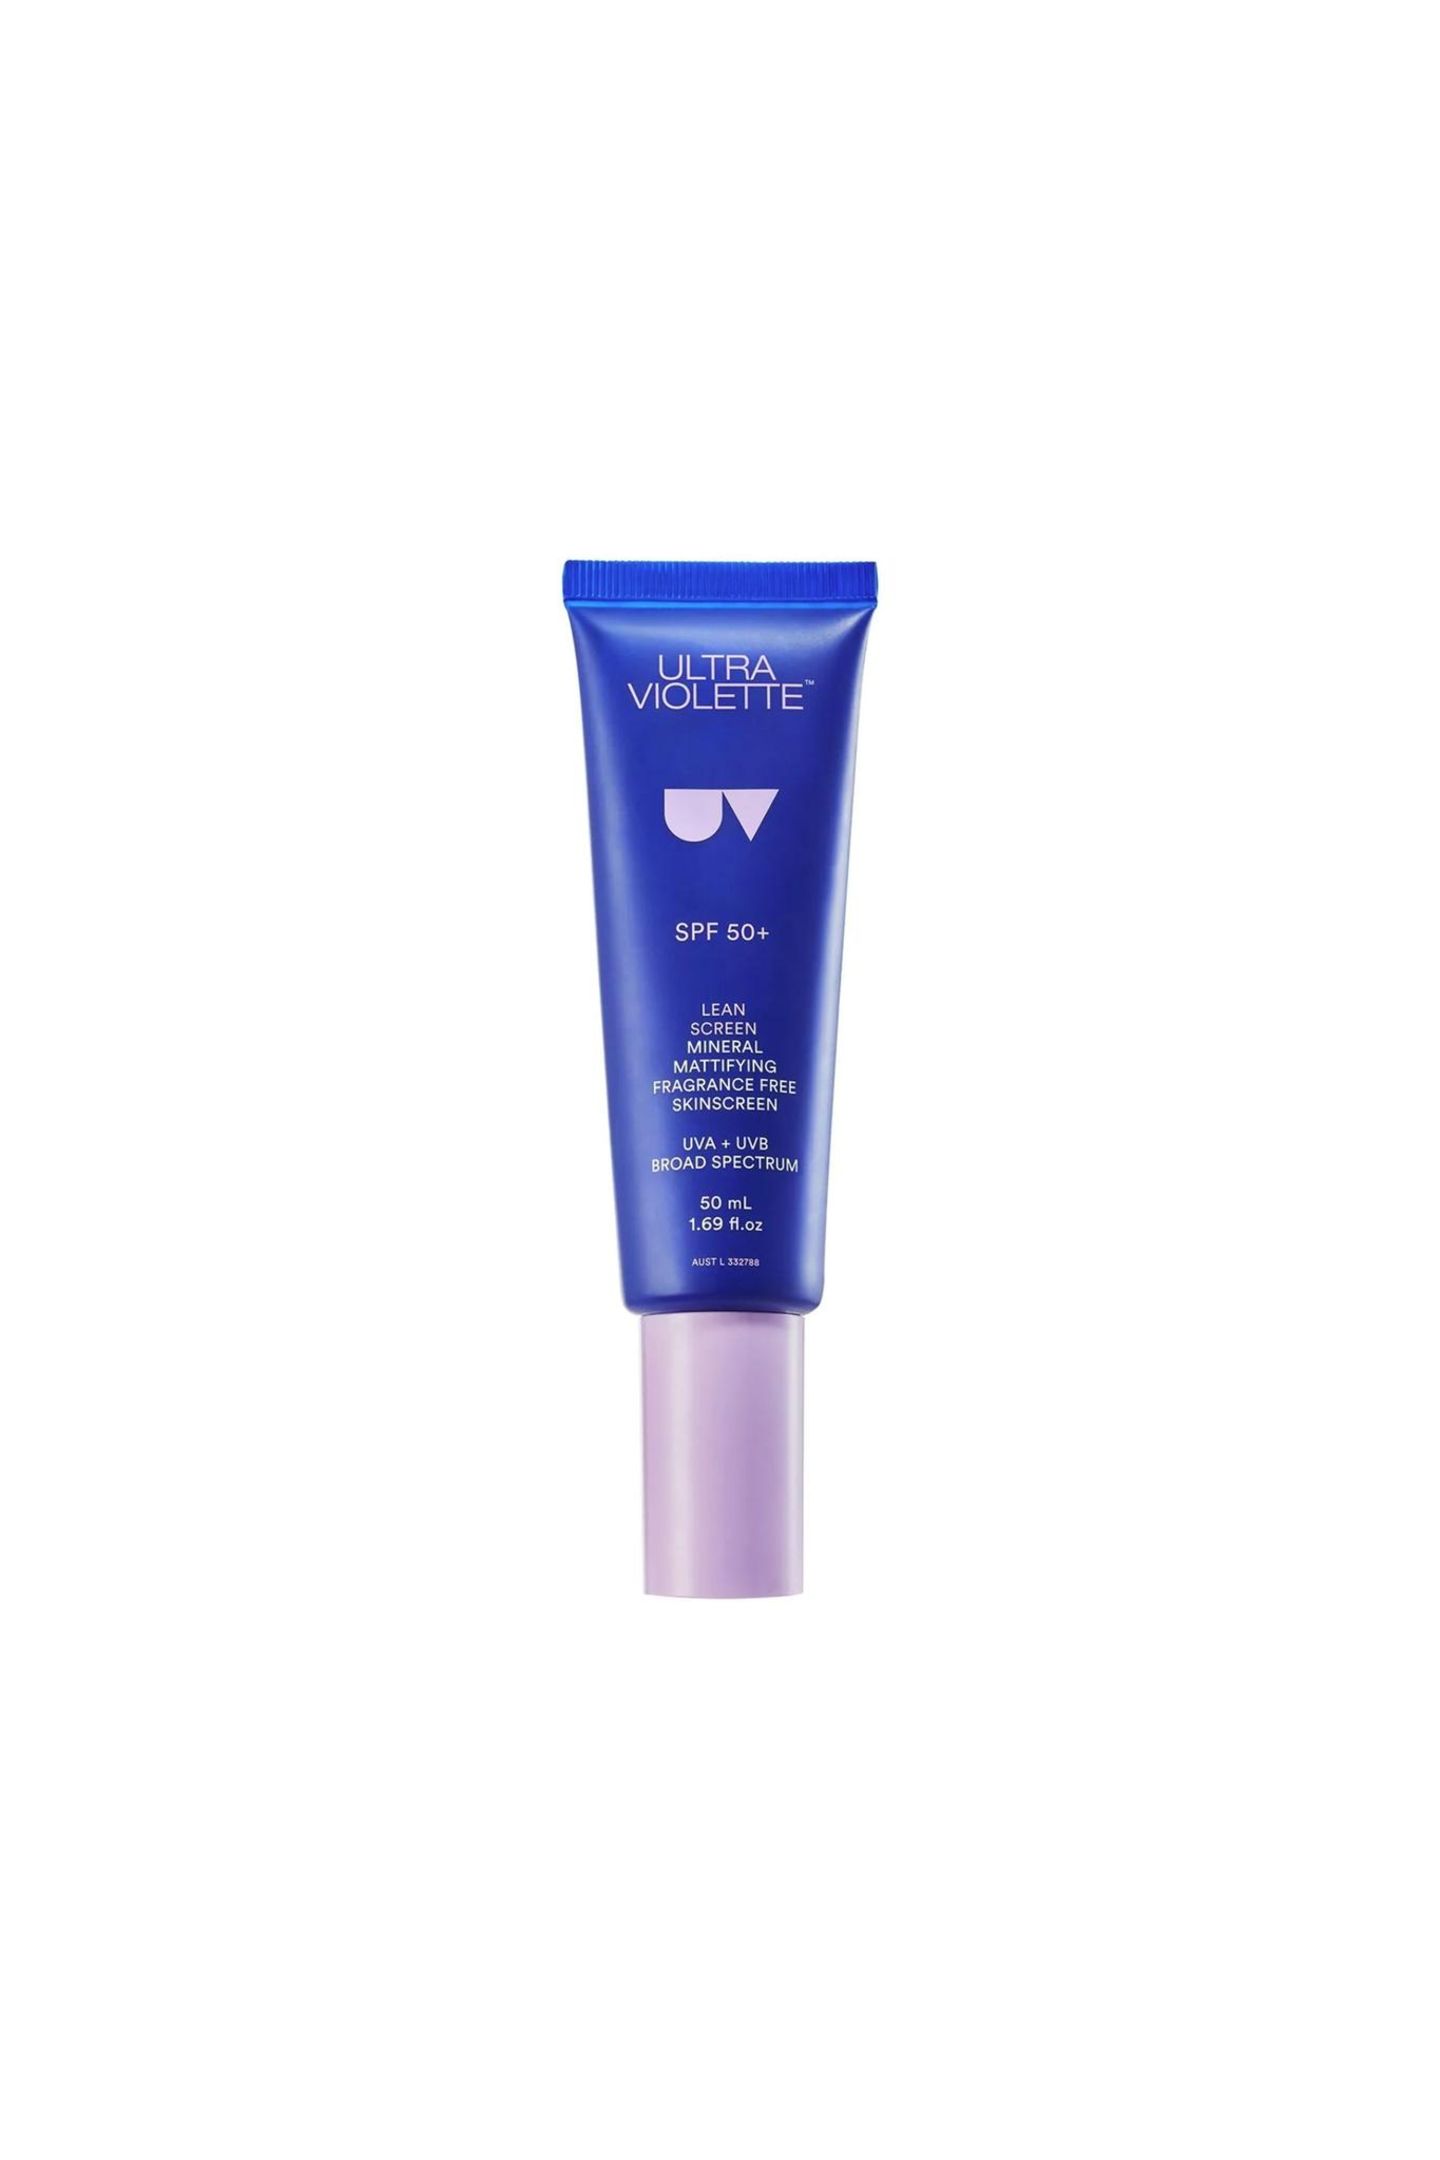 Sonnencreme Gesicht: Ultra Violette SPF 30 Lean Sunscreen